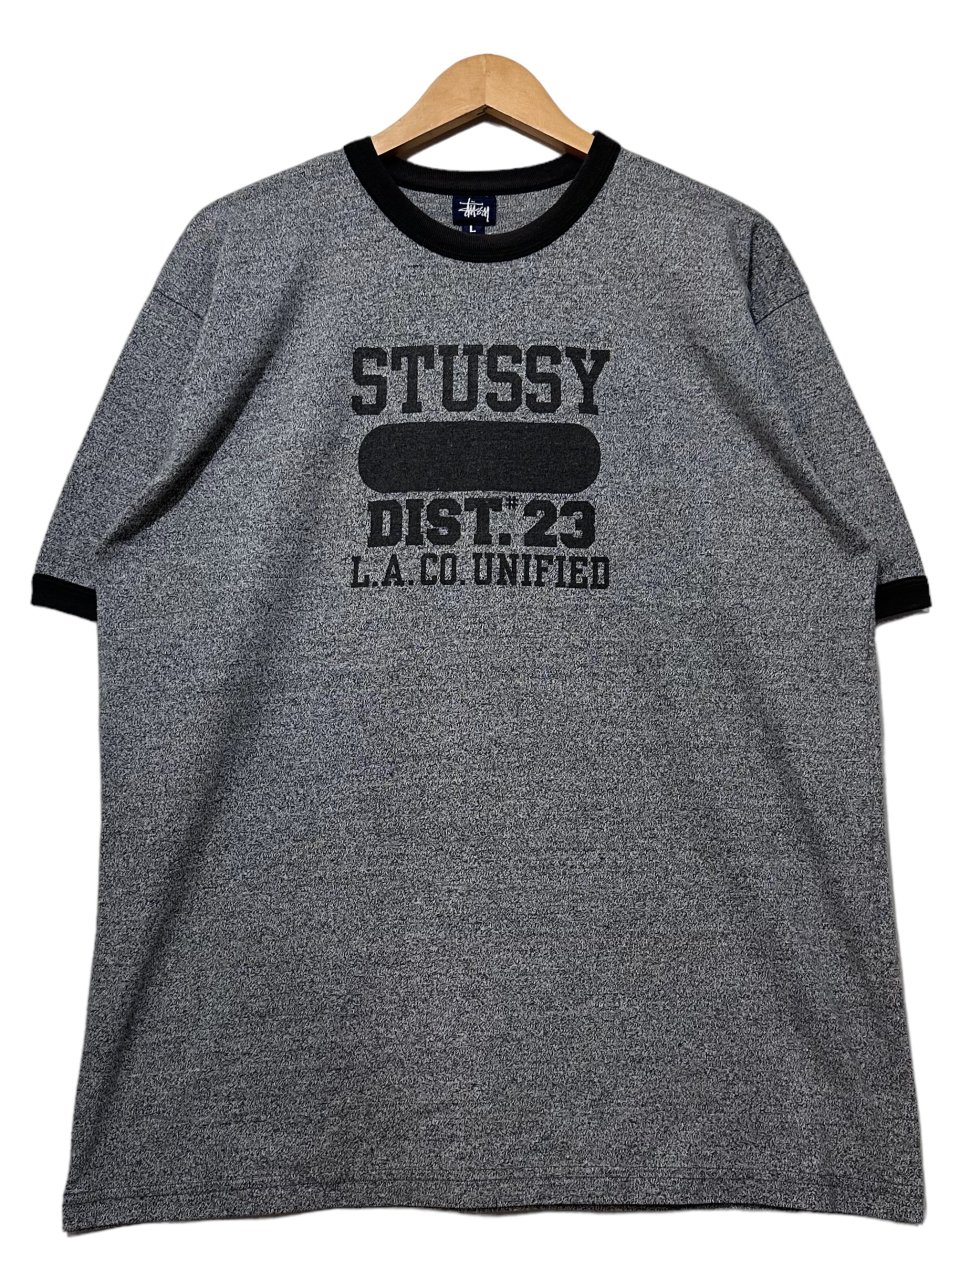 stussy 90s 00s Tシャツ オールドステューシー old